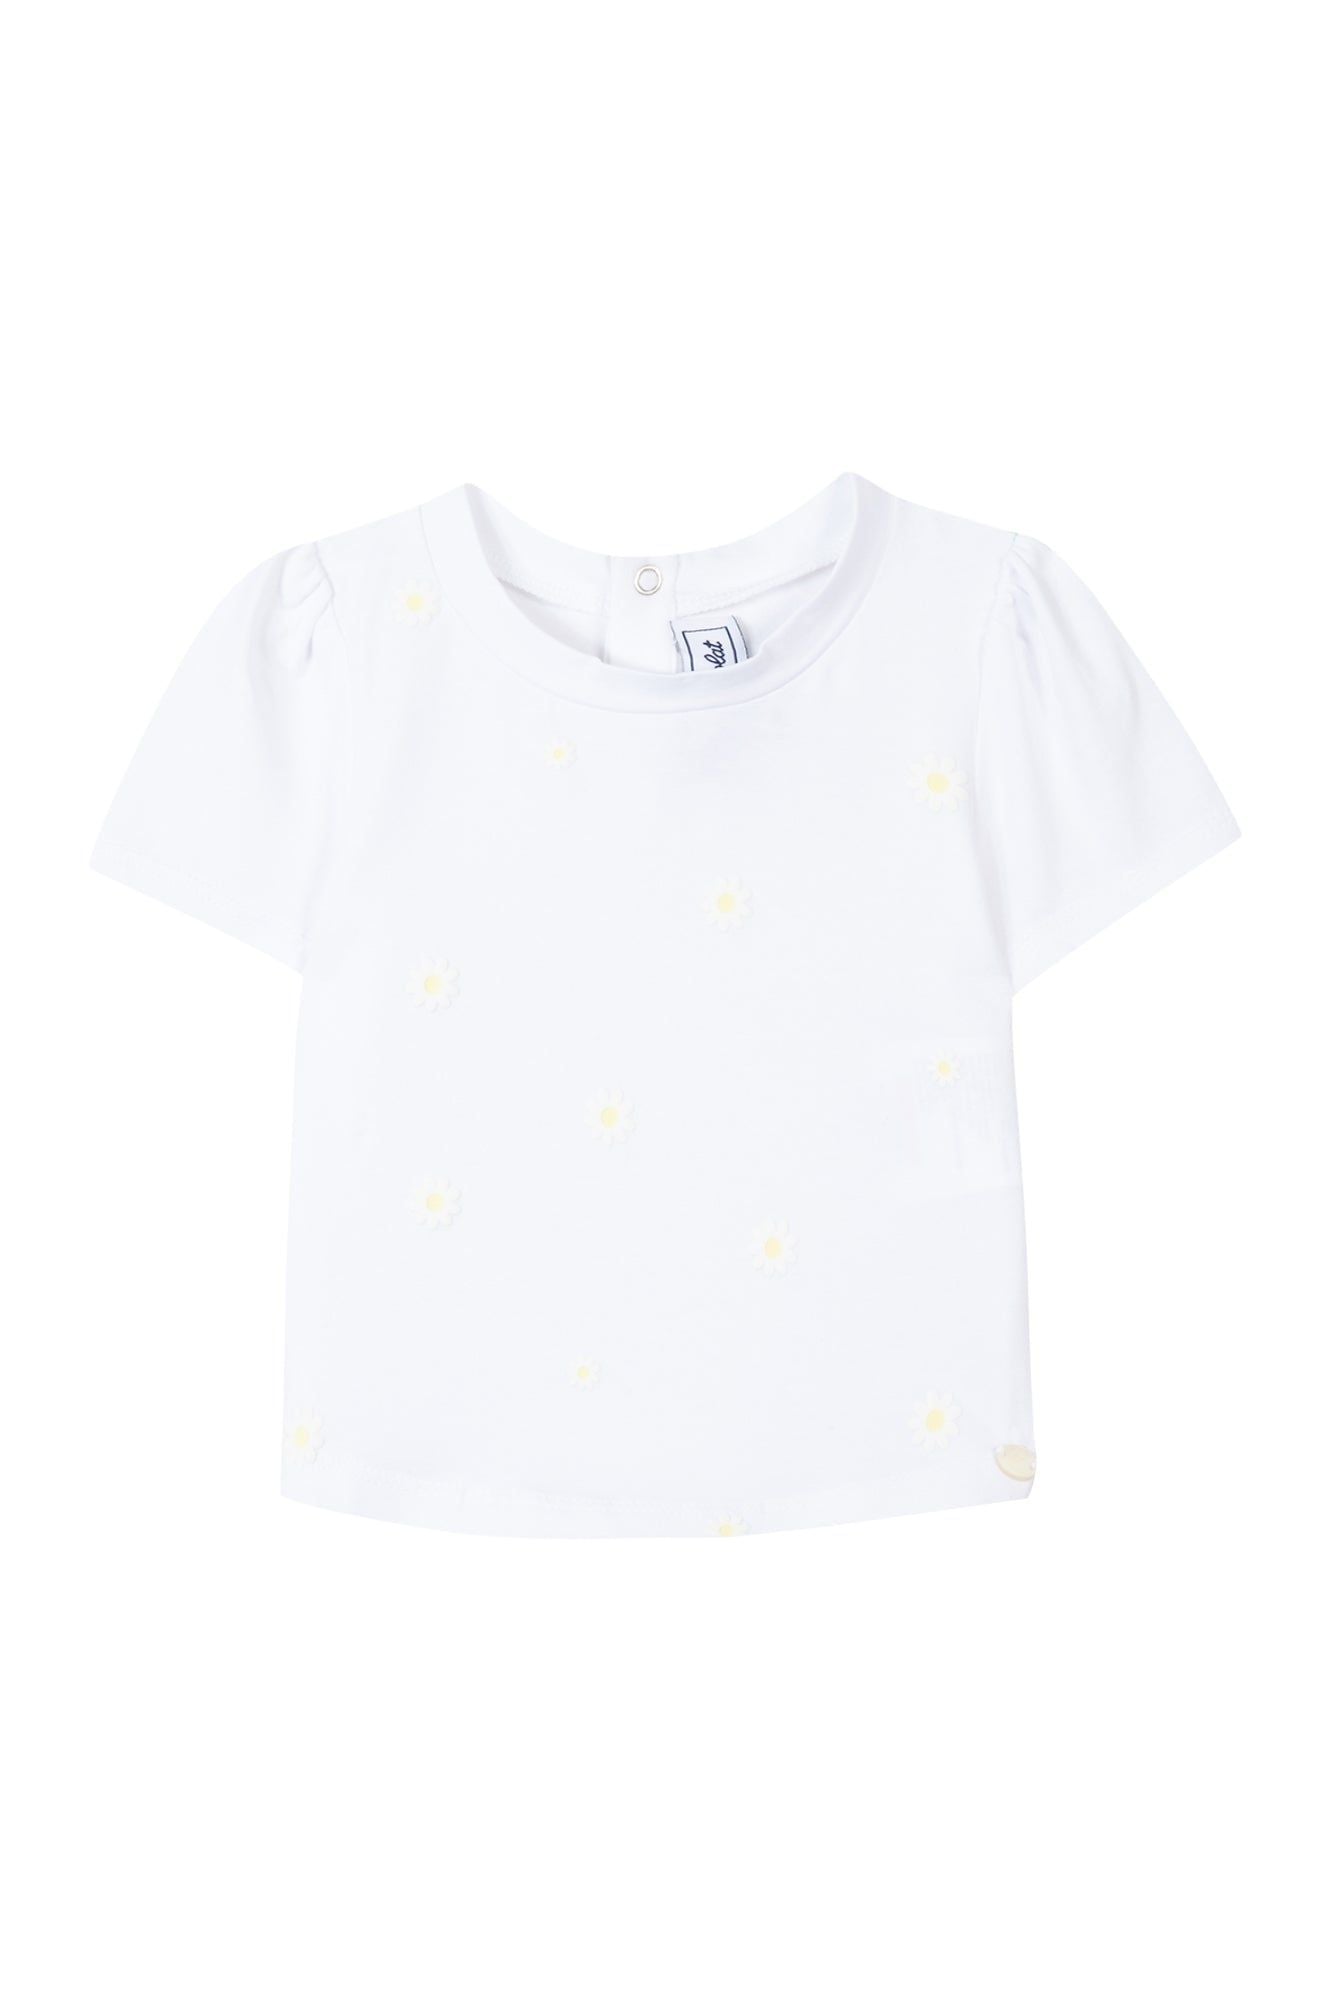 Jaune Pale Baby Balade Parisienne T-shirt